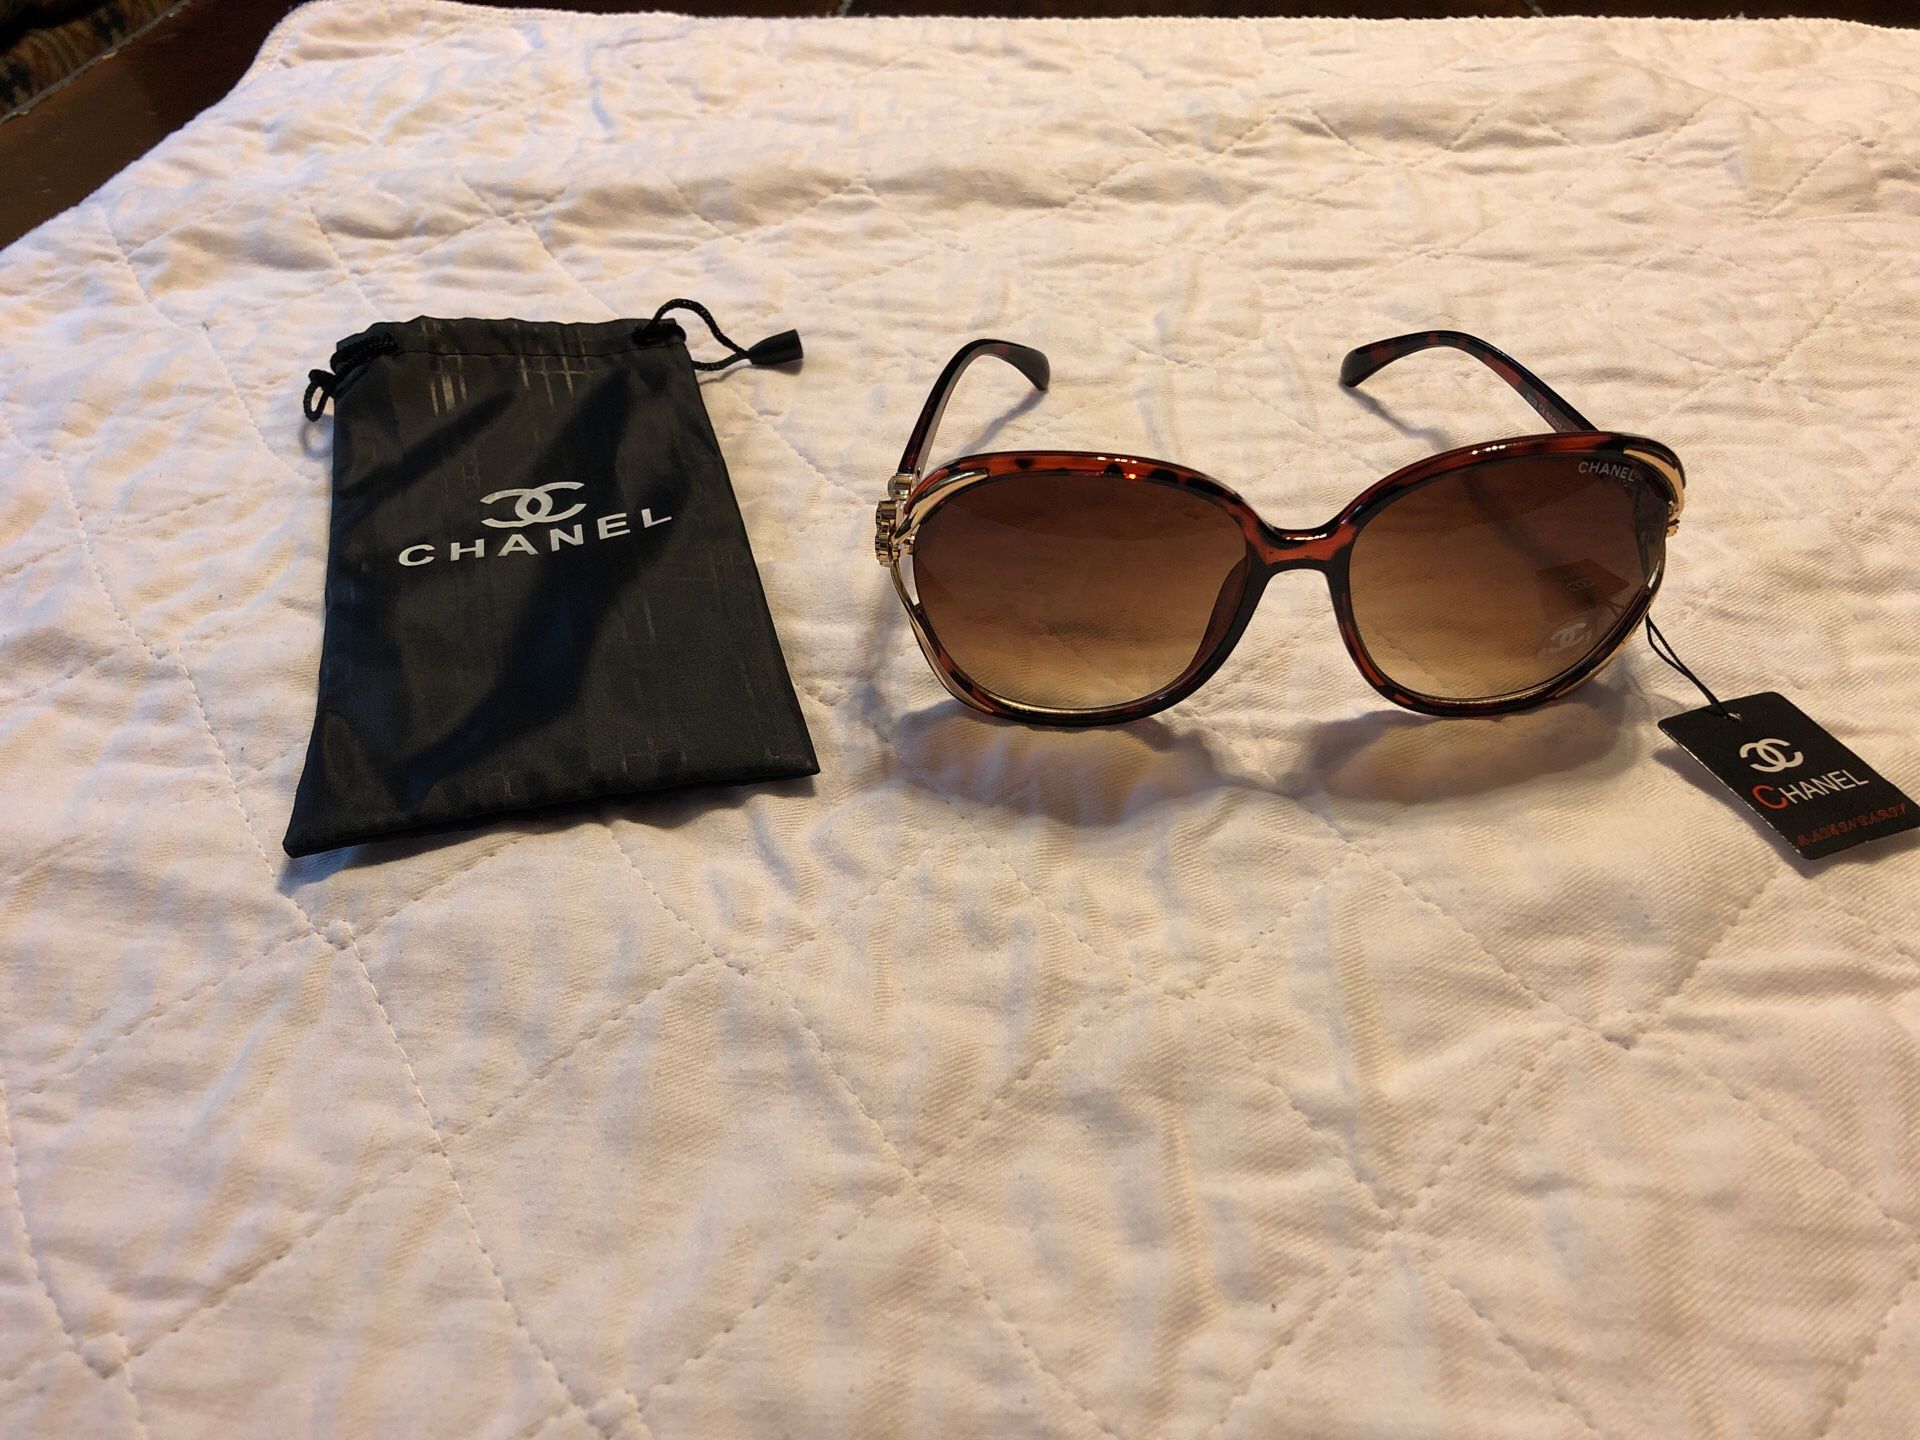 Women’s sunglasses, Chanel, brand new